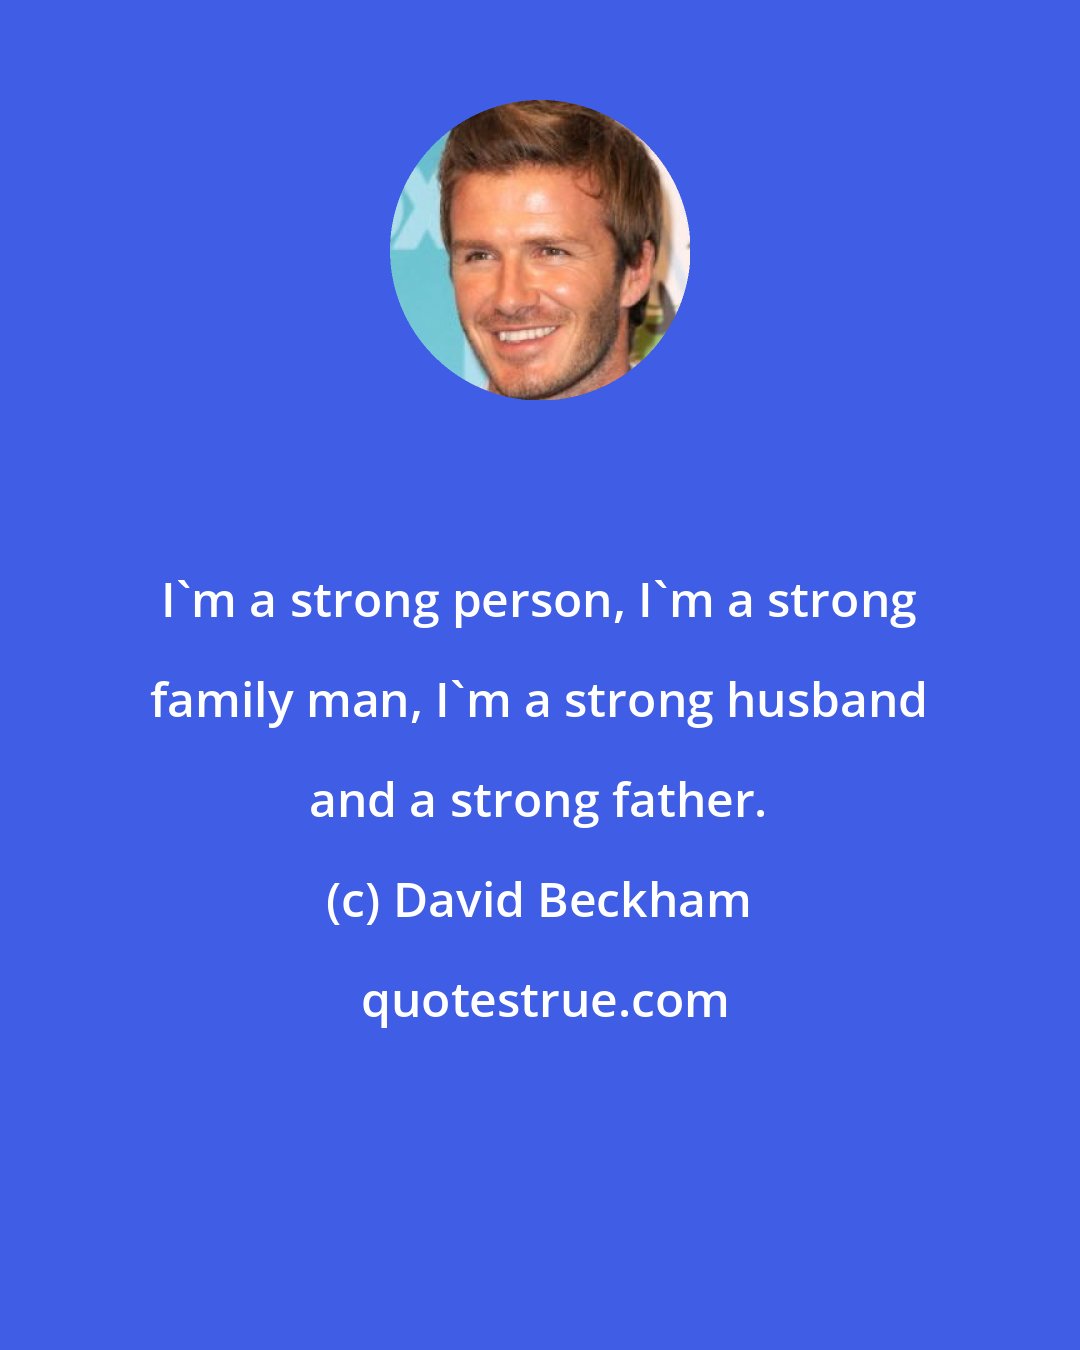 David Beckham: I'm a strong person, I'm a strong family man, I'm a strong husband and a strong father.